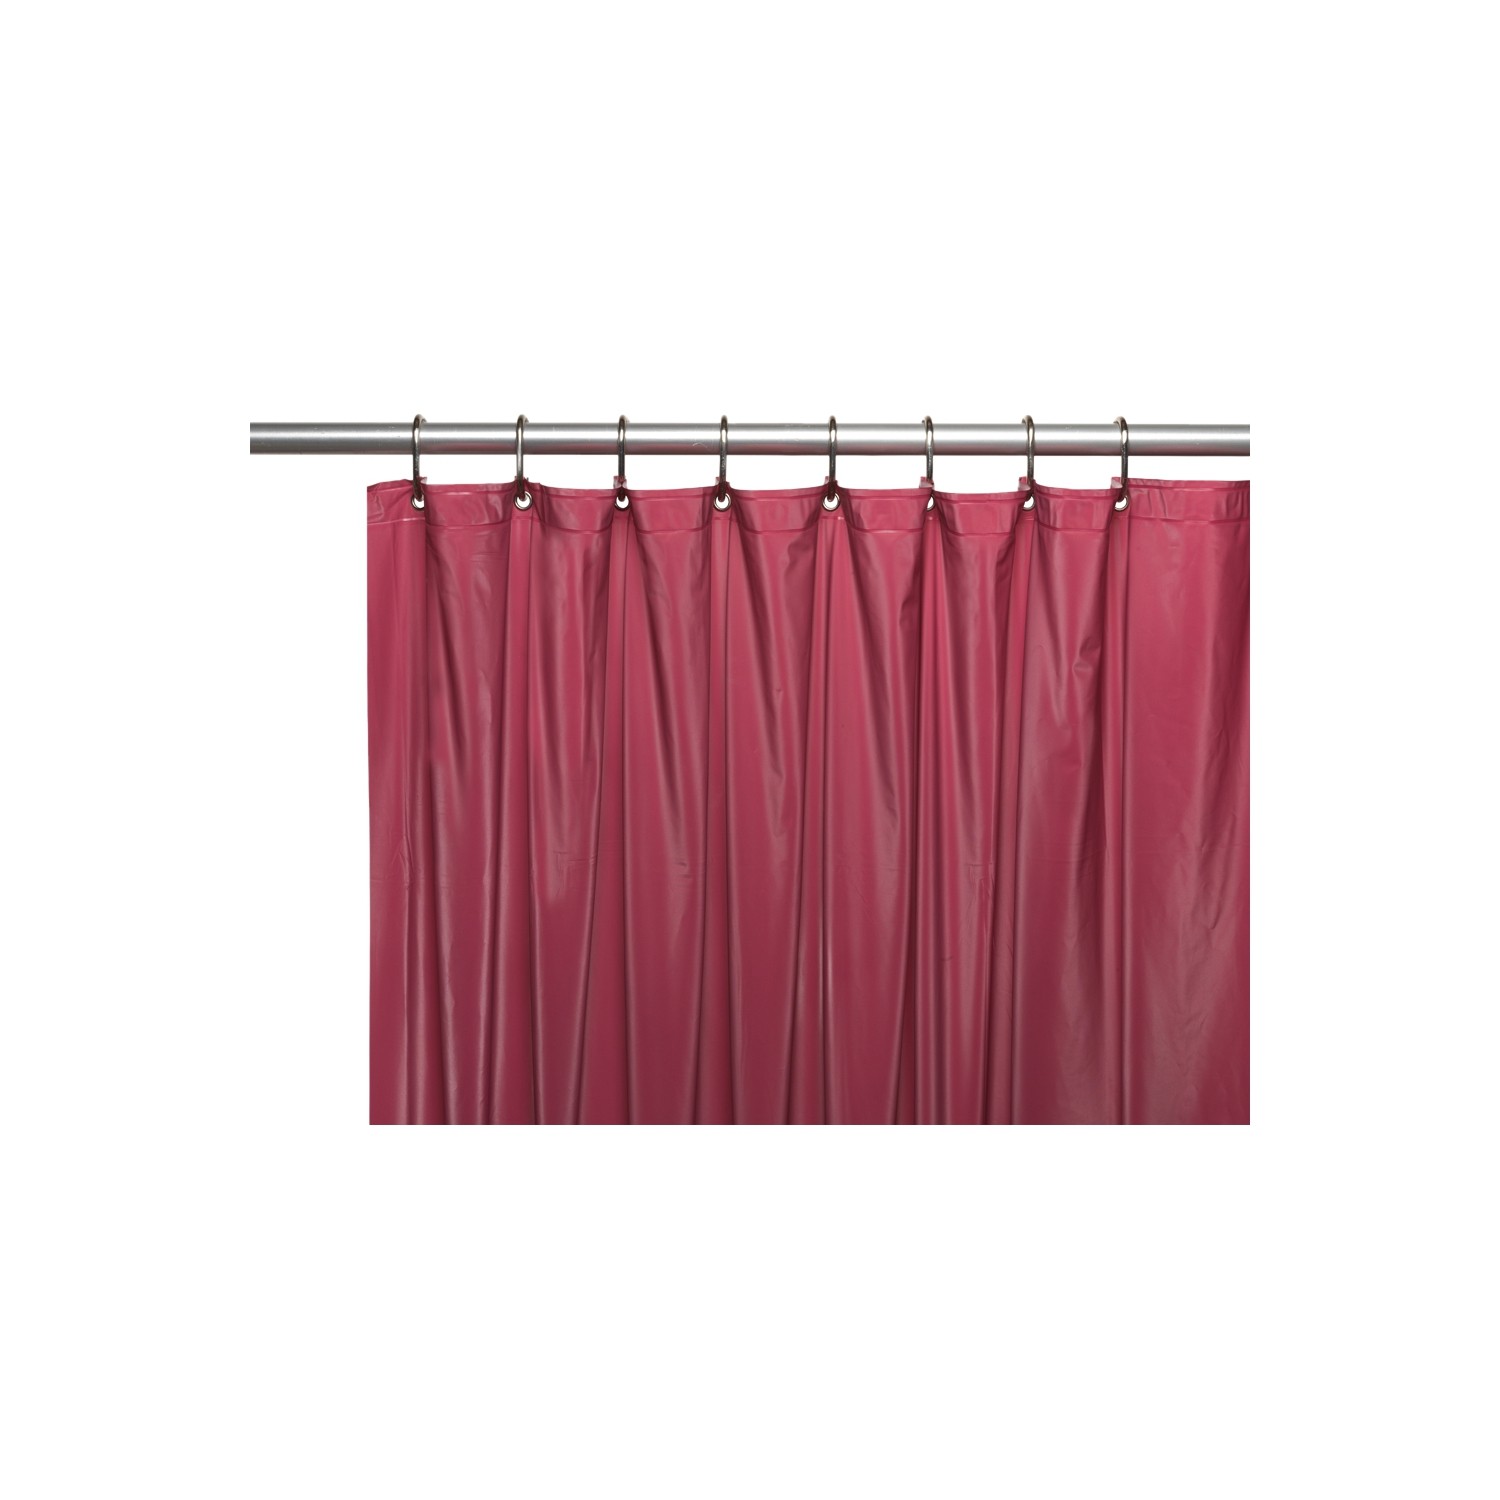 Metal Grommets Burdy, Pink Vinyl Shower Curtain Liner